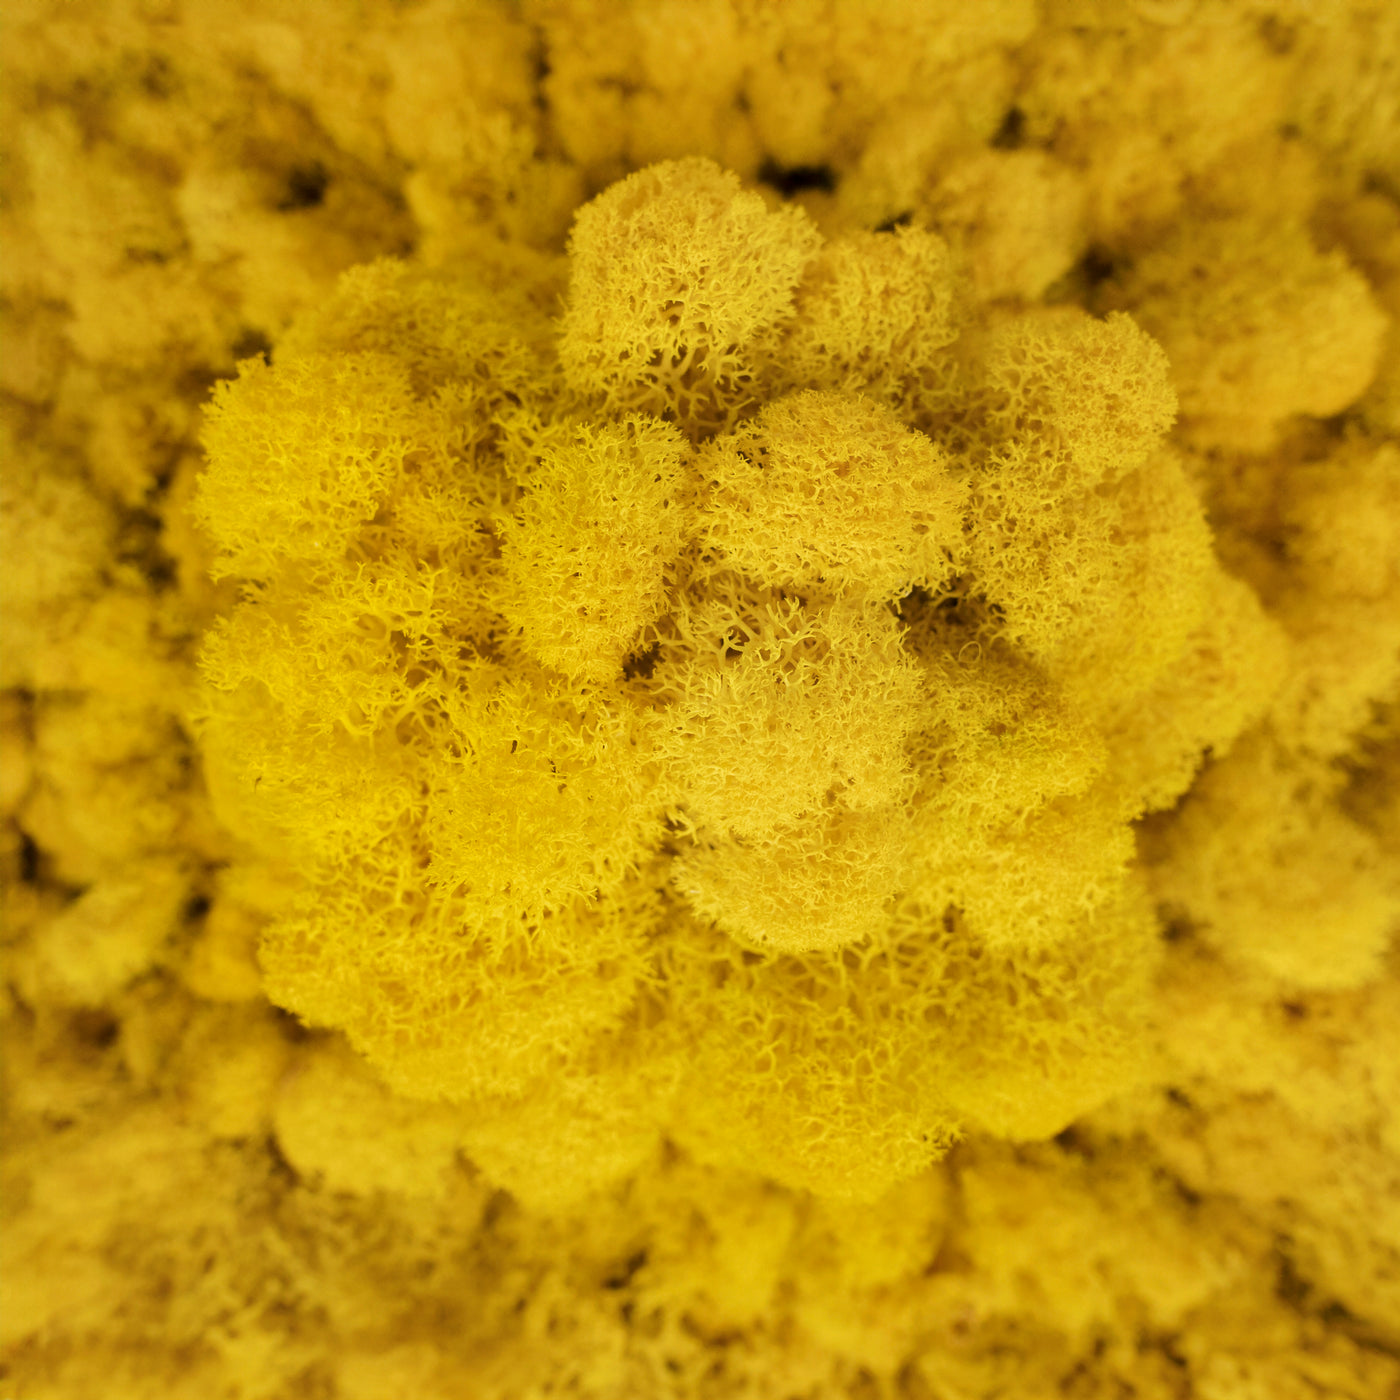 Licheni curatati si fara radacina conservati 500g NET, calitate ULTRA PREMIUM, galben lemon deschis RR09